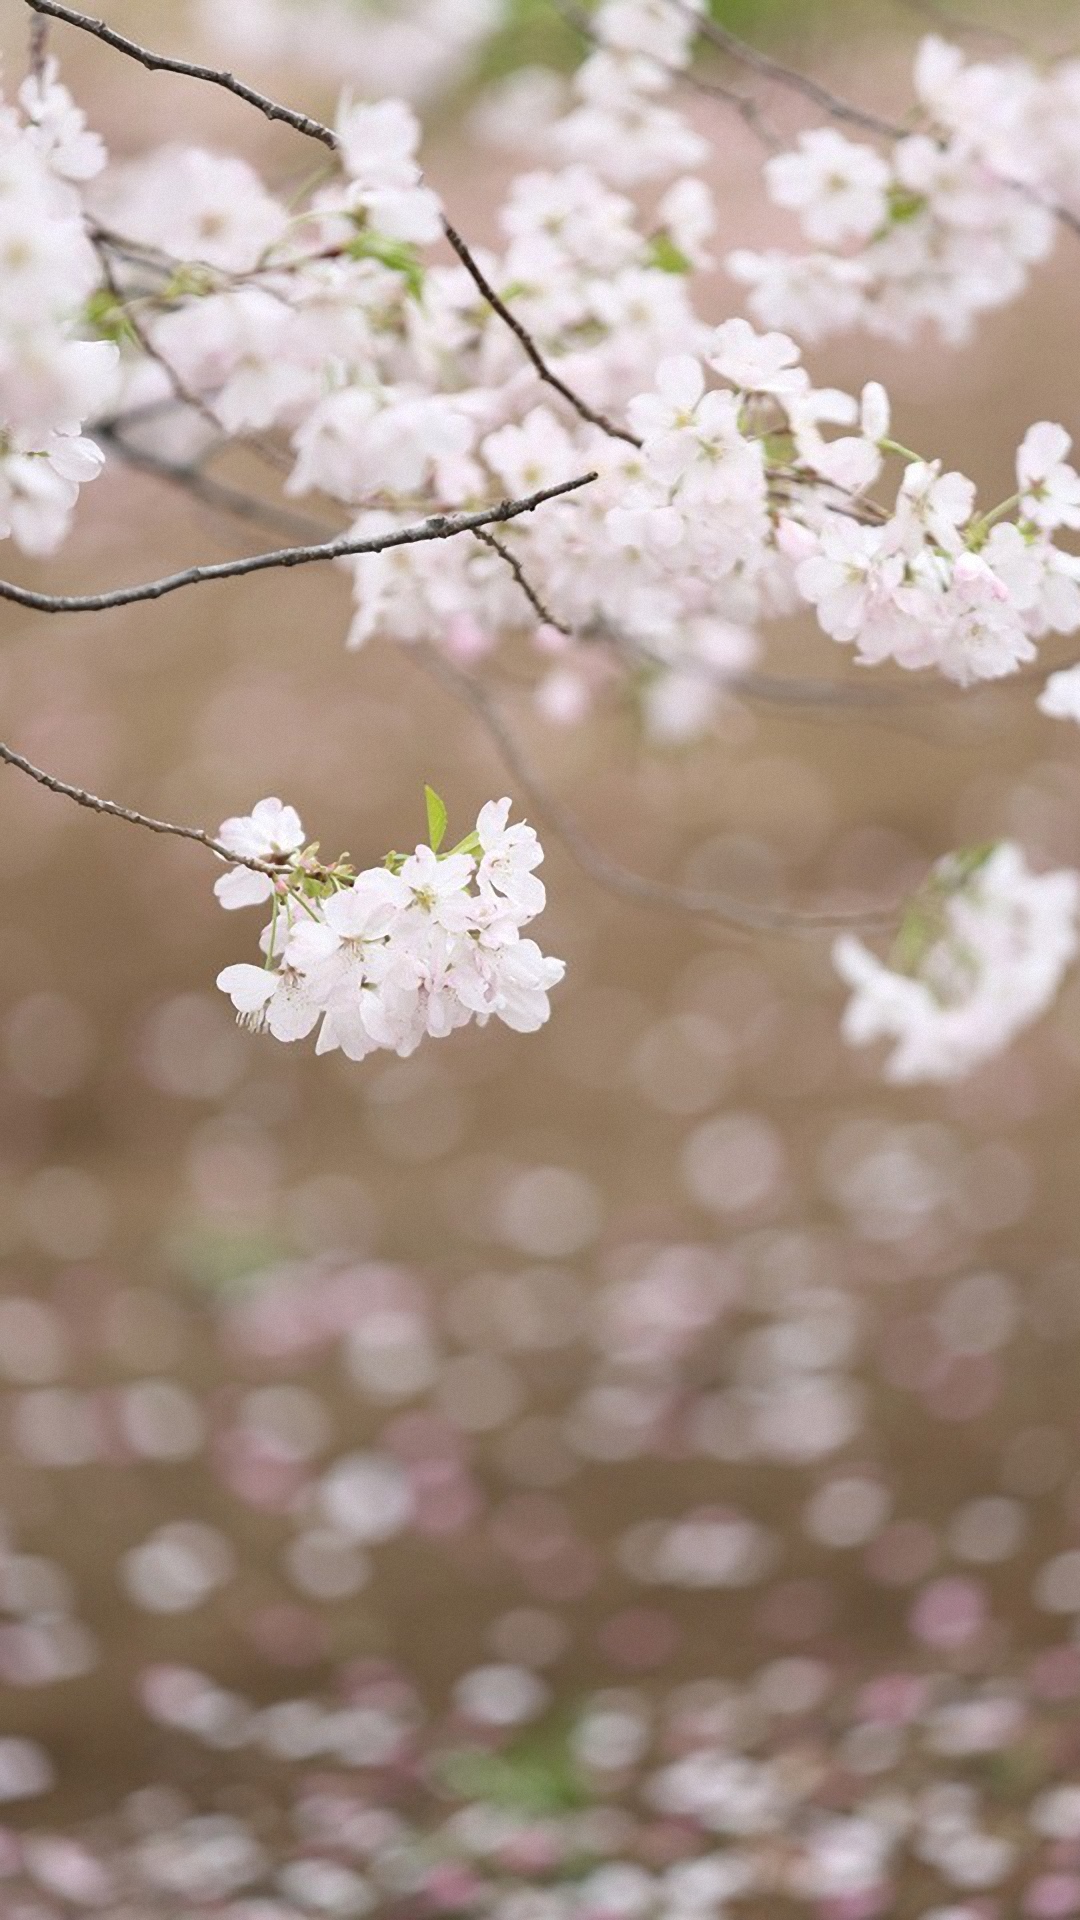 Cherry Blossom Iphone Hd Wallpaper Pixelstalknet